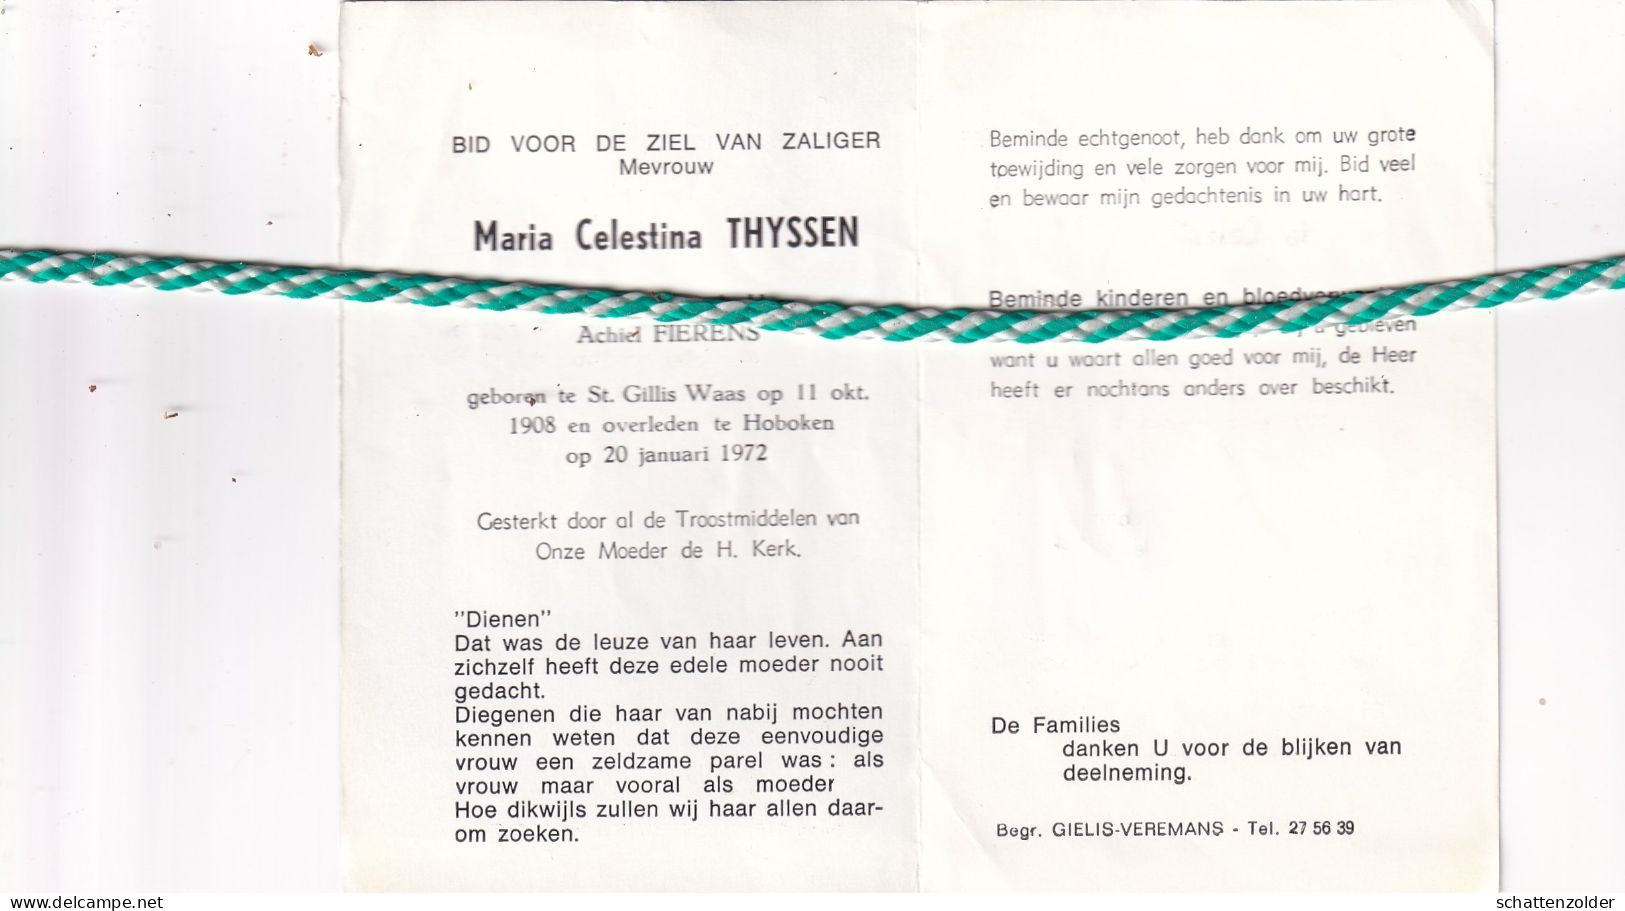 Maria Celestina Thyssen-Fierens, Sint-Gillis-Waas 1908, Hoboken 1972 - Décès